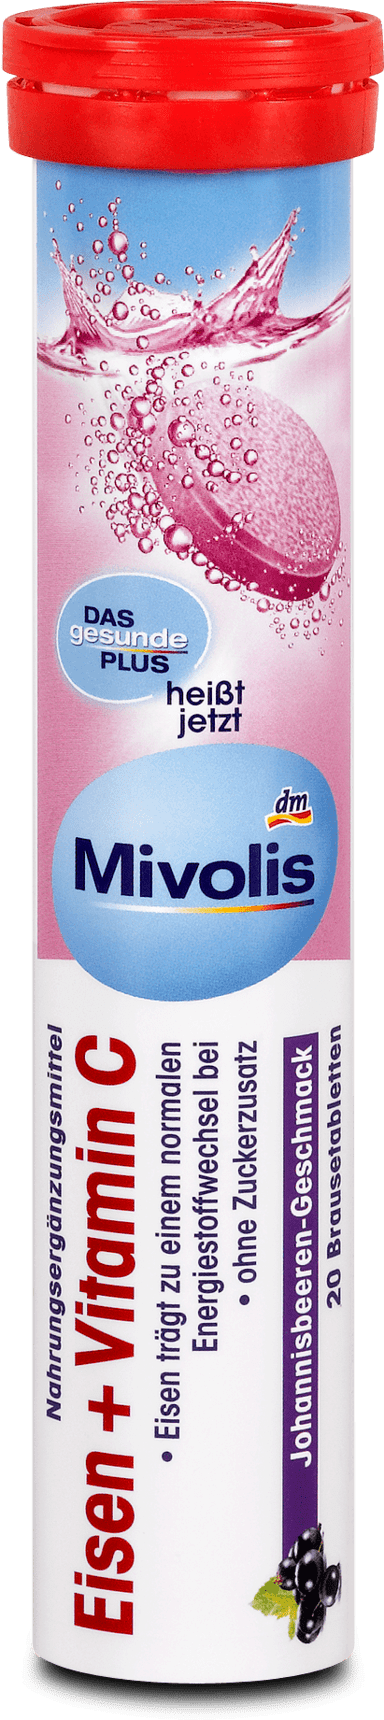 Mivolis iron + vitamin C, 82 effervescent tablets